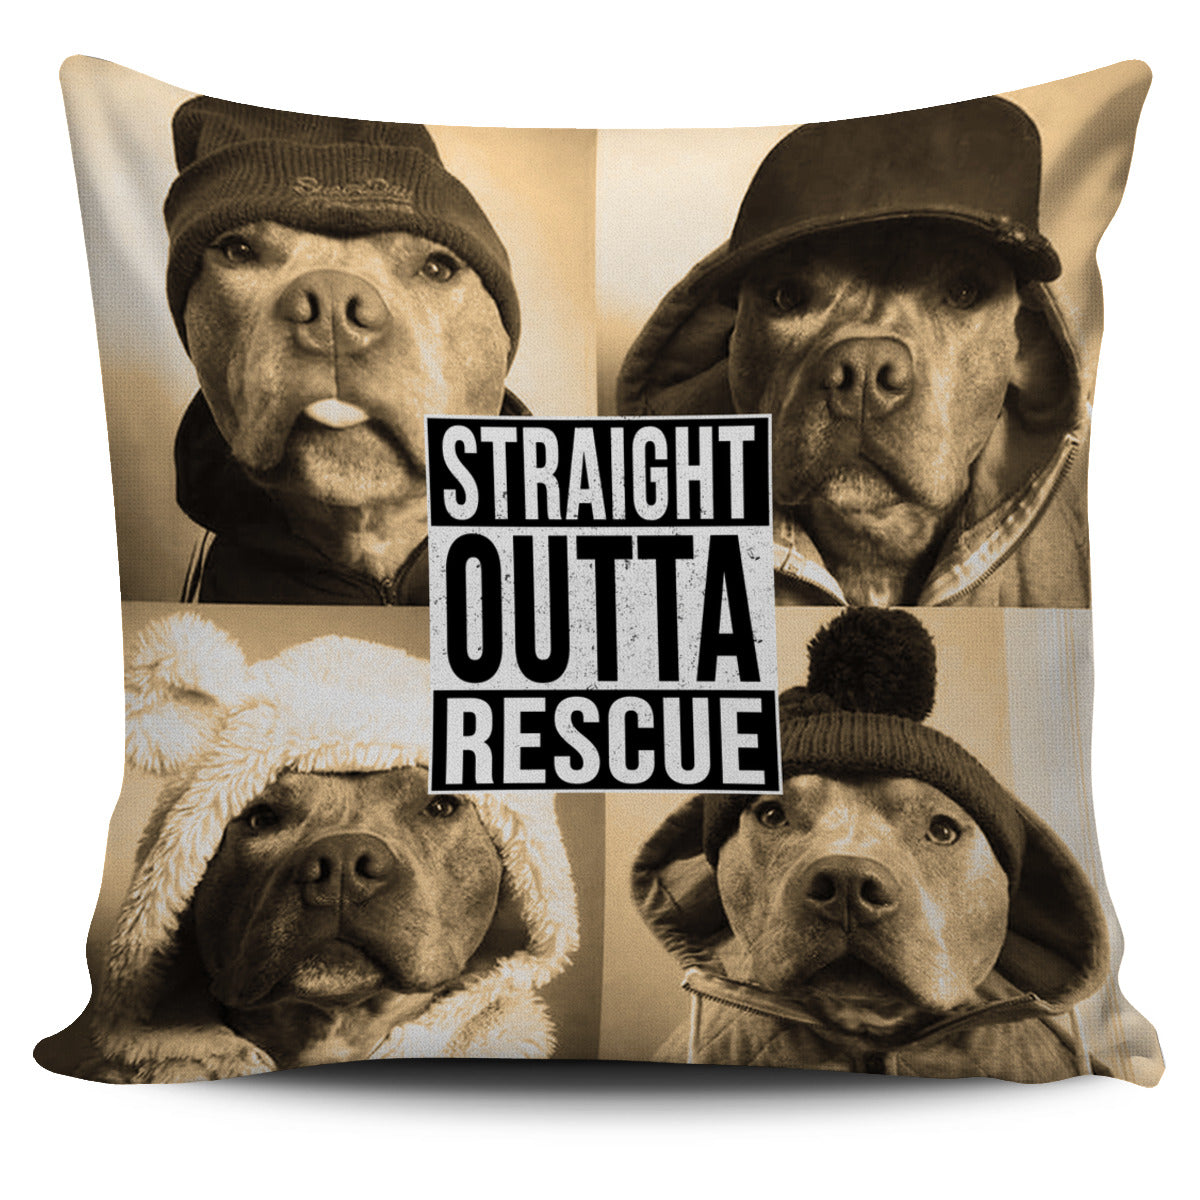 Straight Outta Rescue Pillow Cover